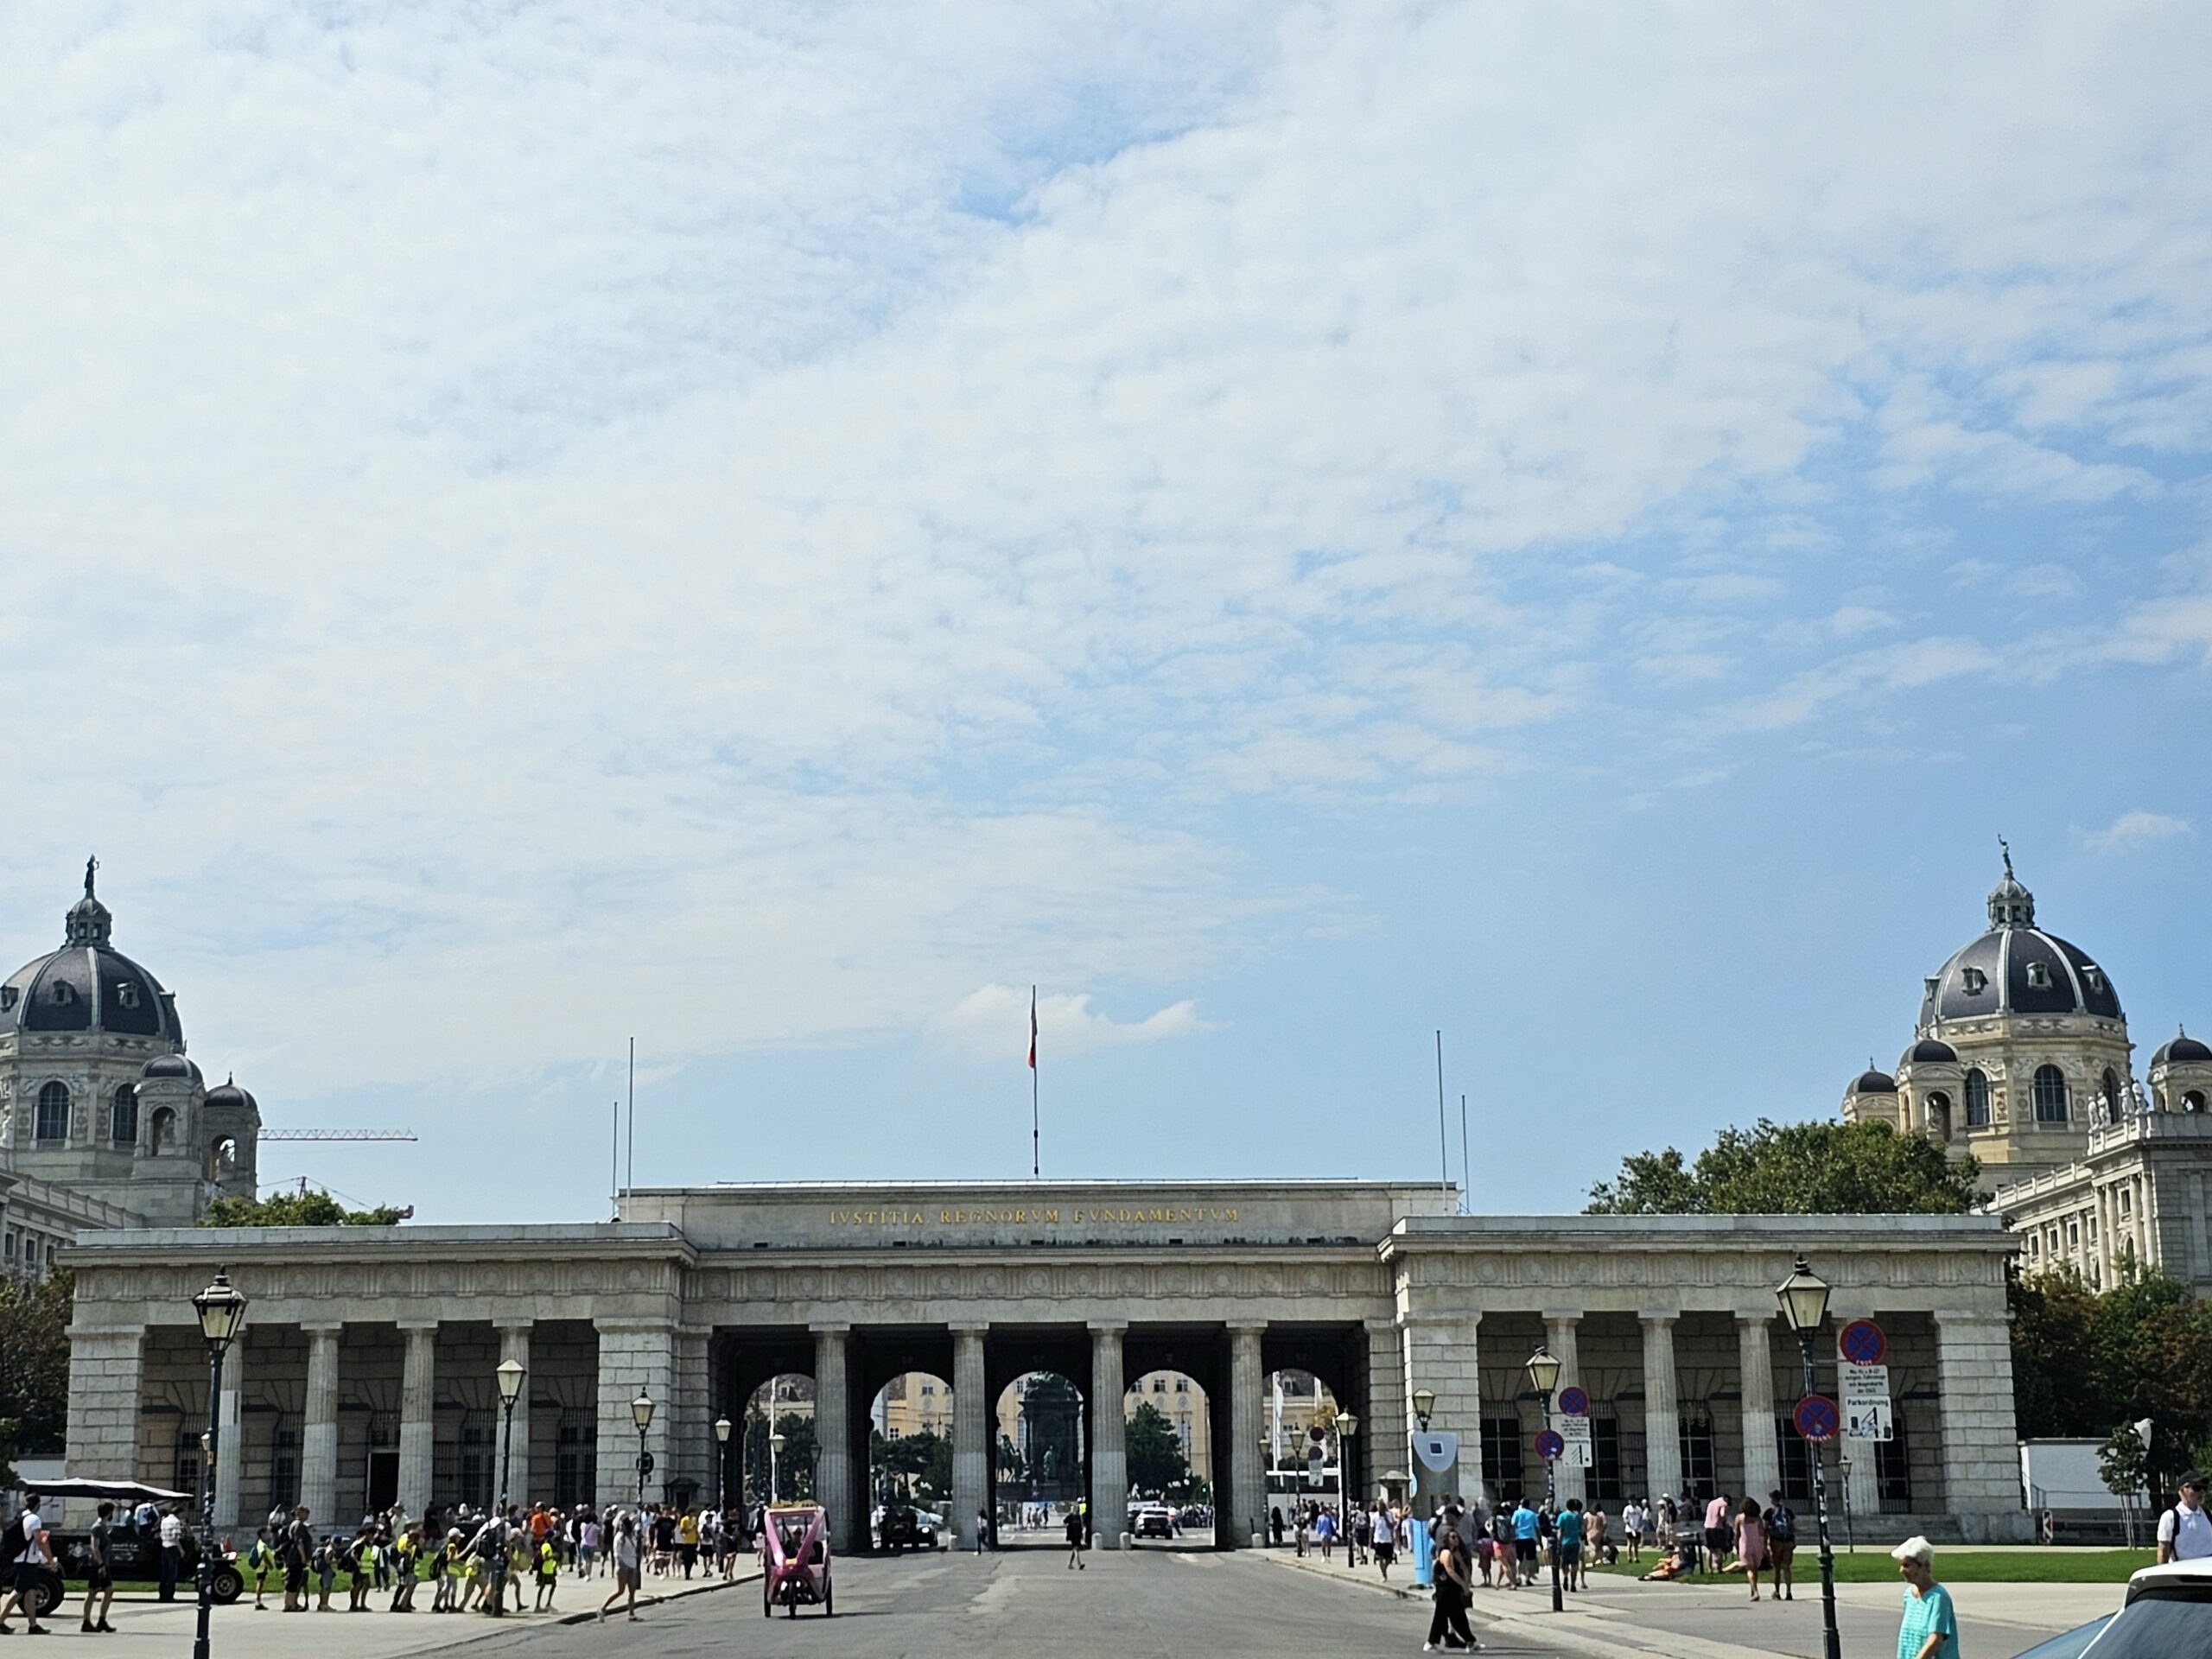 The main gates of the Hofburg Palace. Image: 360onhistory.com